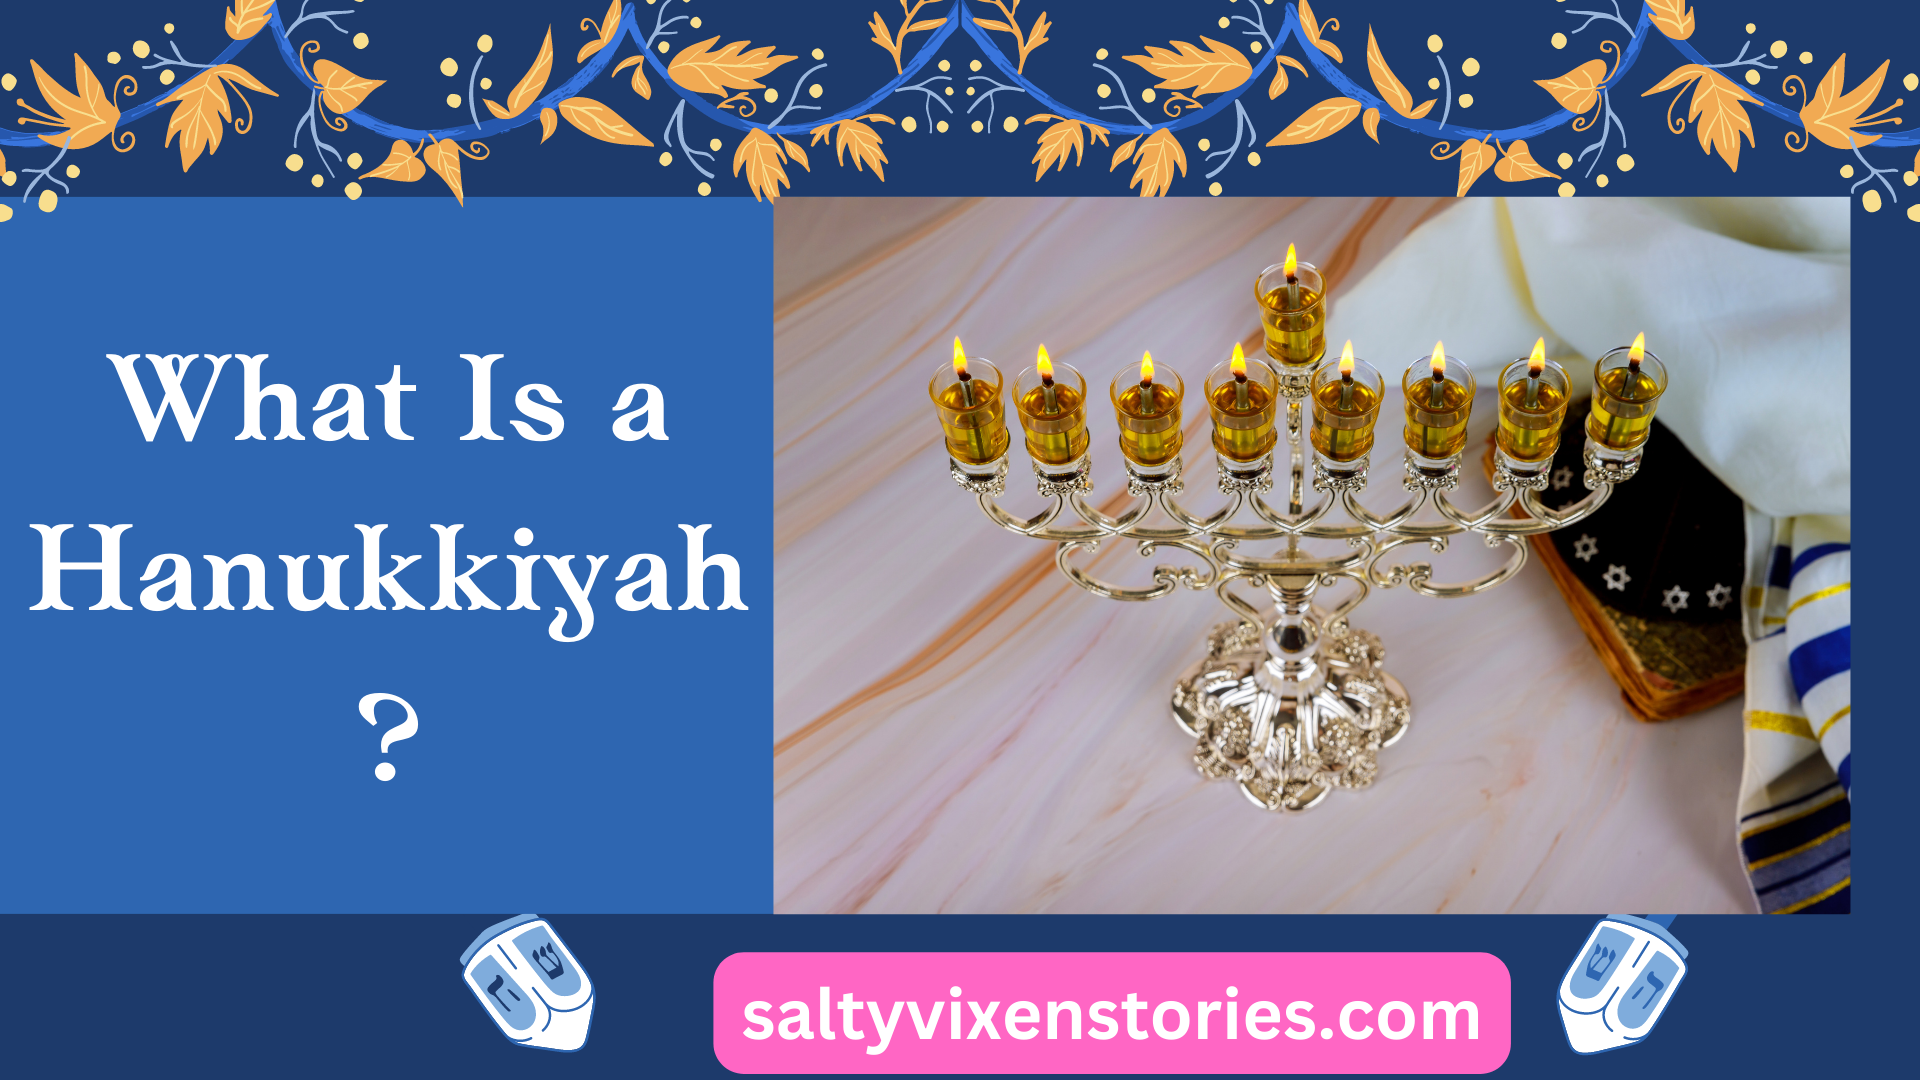 What Is a Hanukkiyah?